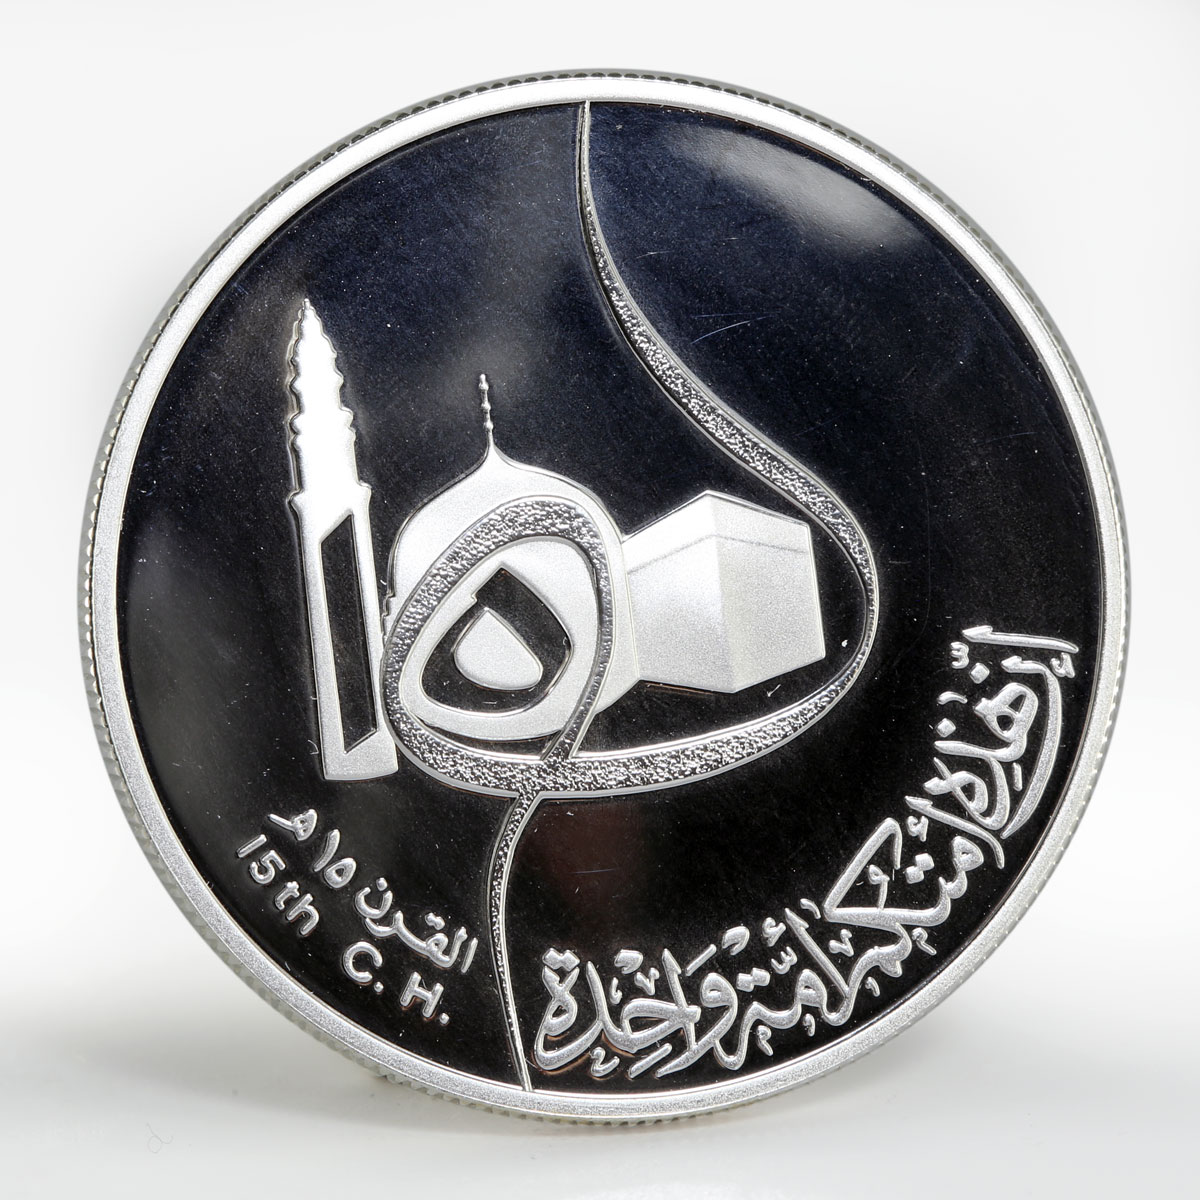 Iraq 1 dinar 1400th Anniversary of Hijra silver coin 1980